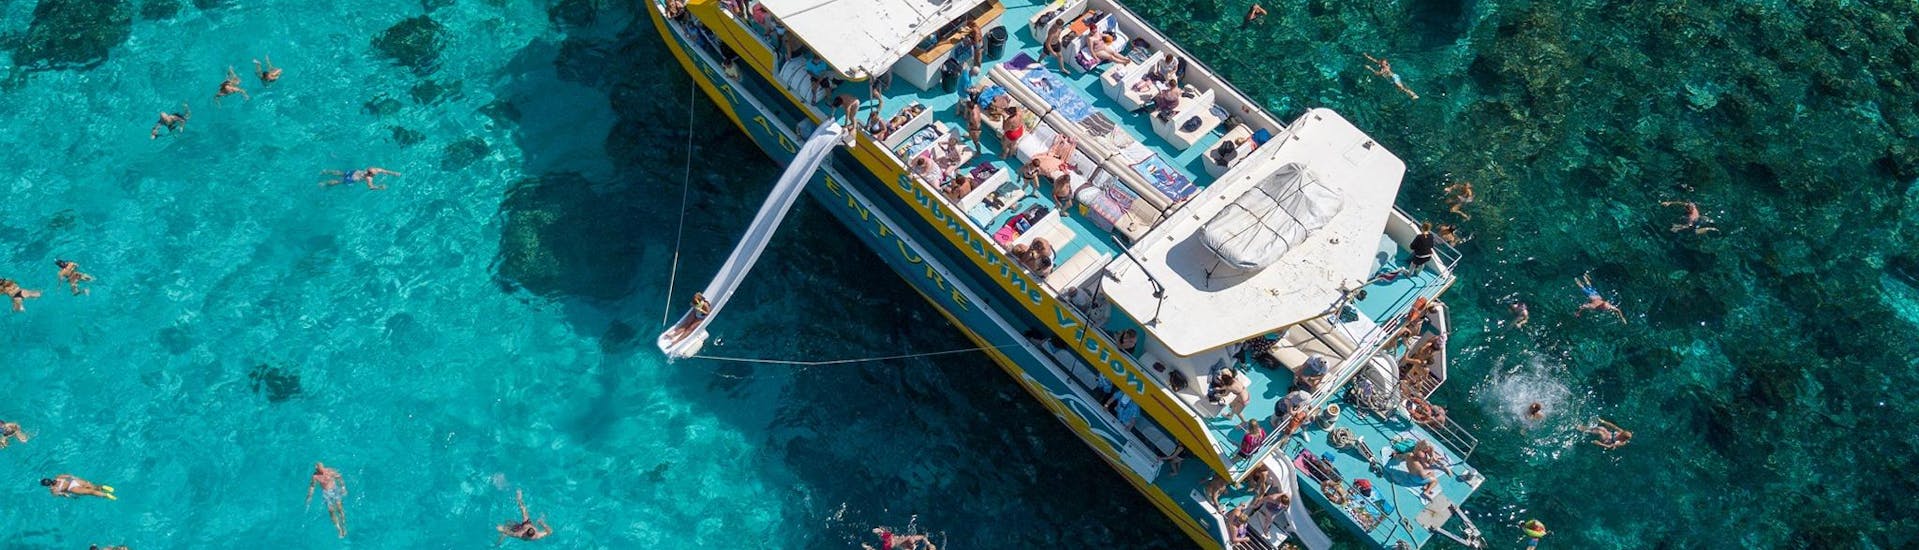 Les vacanciers peuvent profiter de la mer bleue claire du Crystal Lagoon, lors d'une balade en catamaran avec Sea Adventure Excursions à Malte.